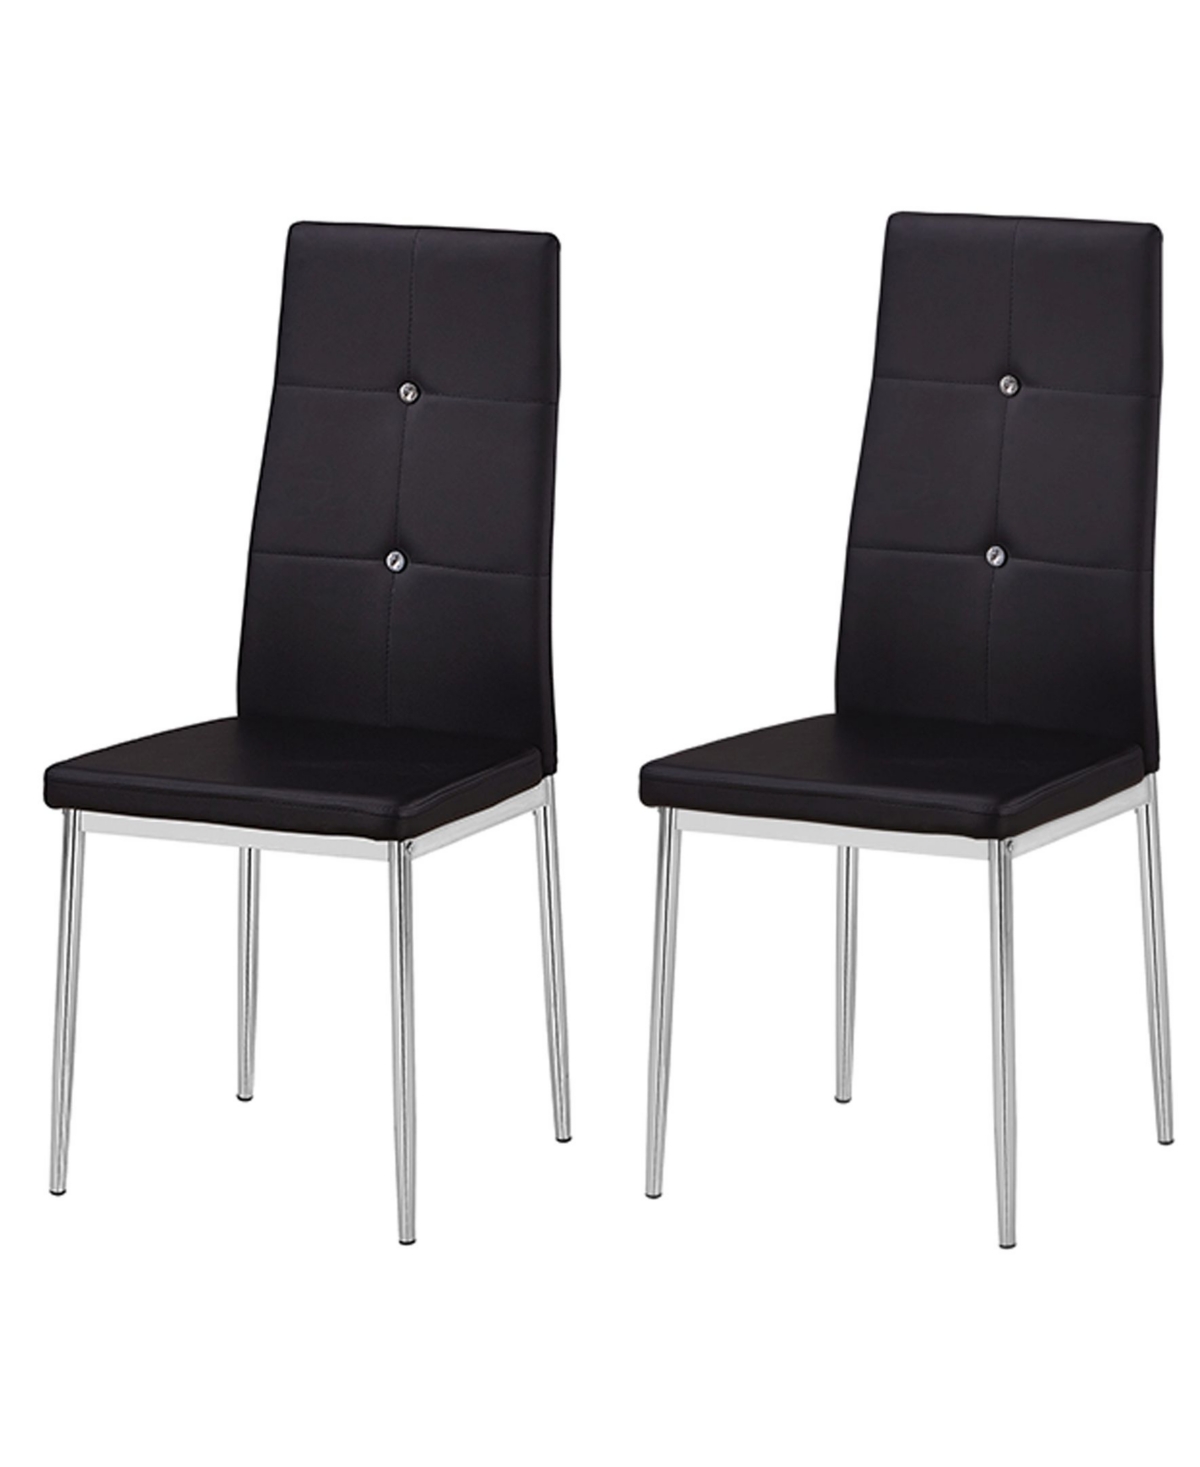 Trina Modern Living Side Chairs,, Set of 2